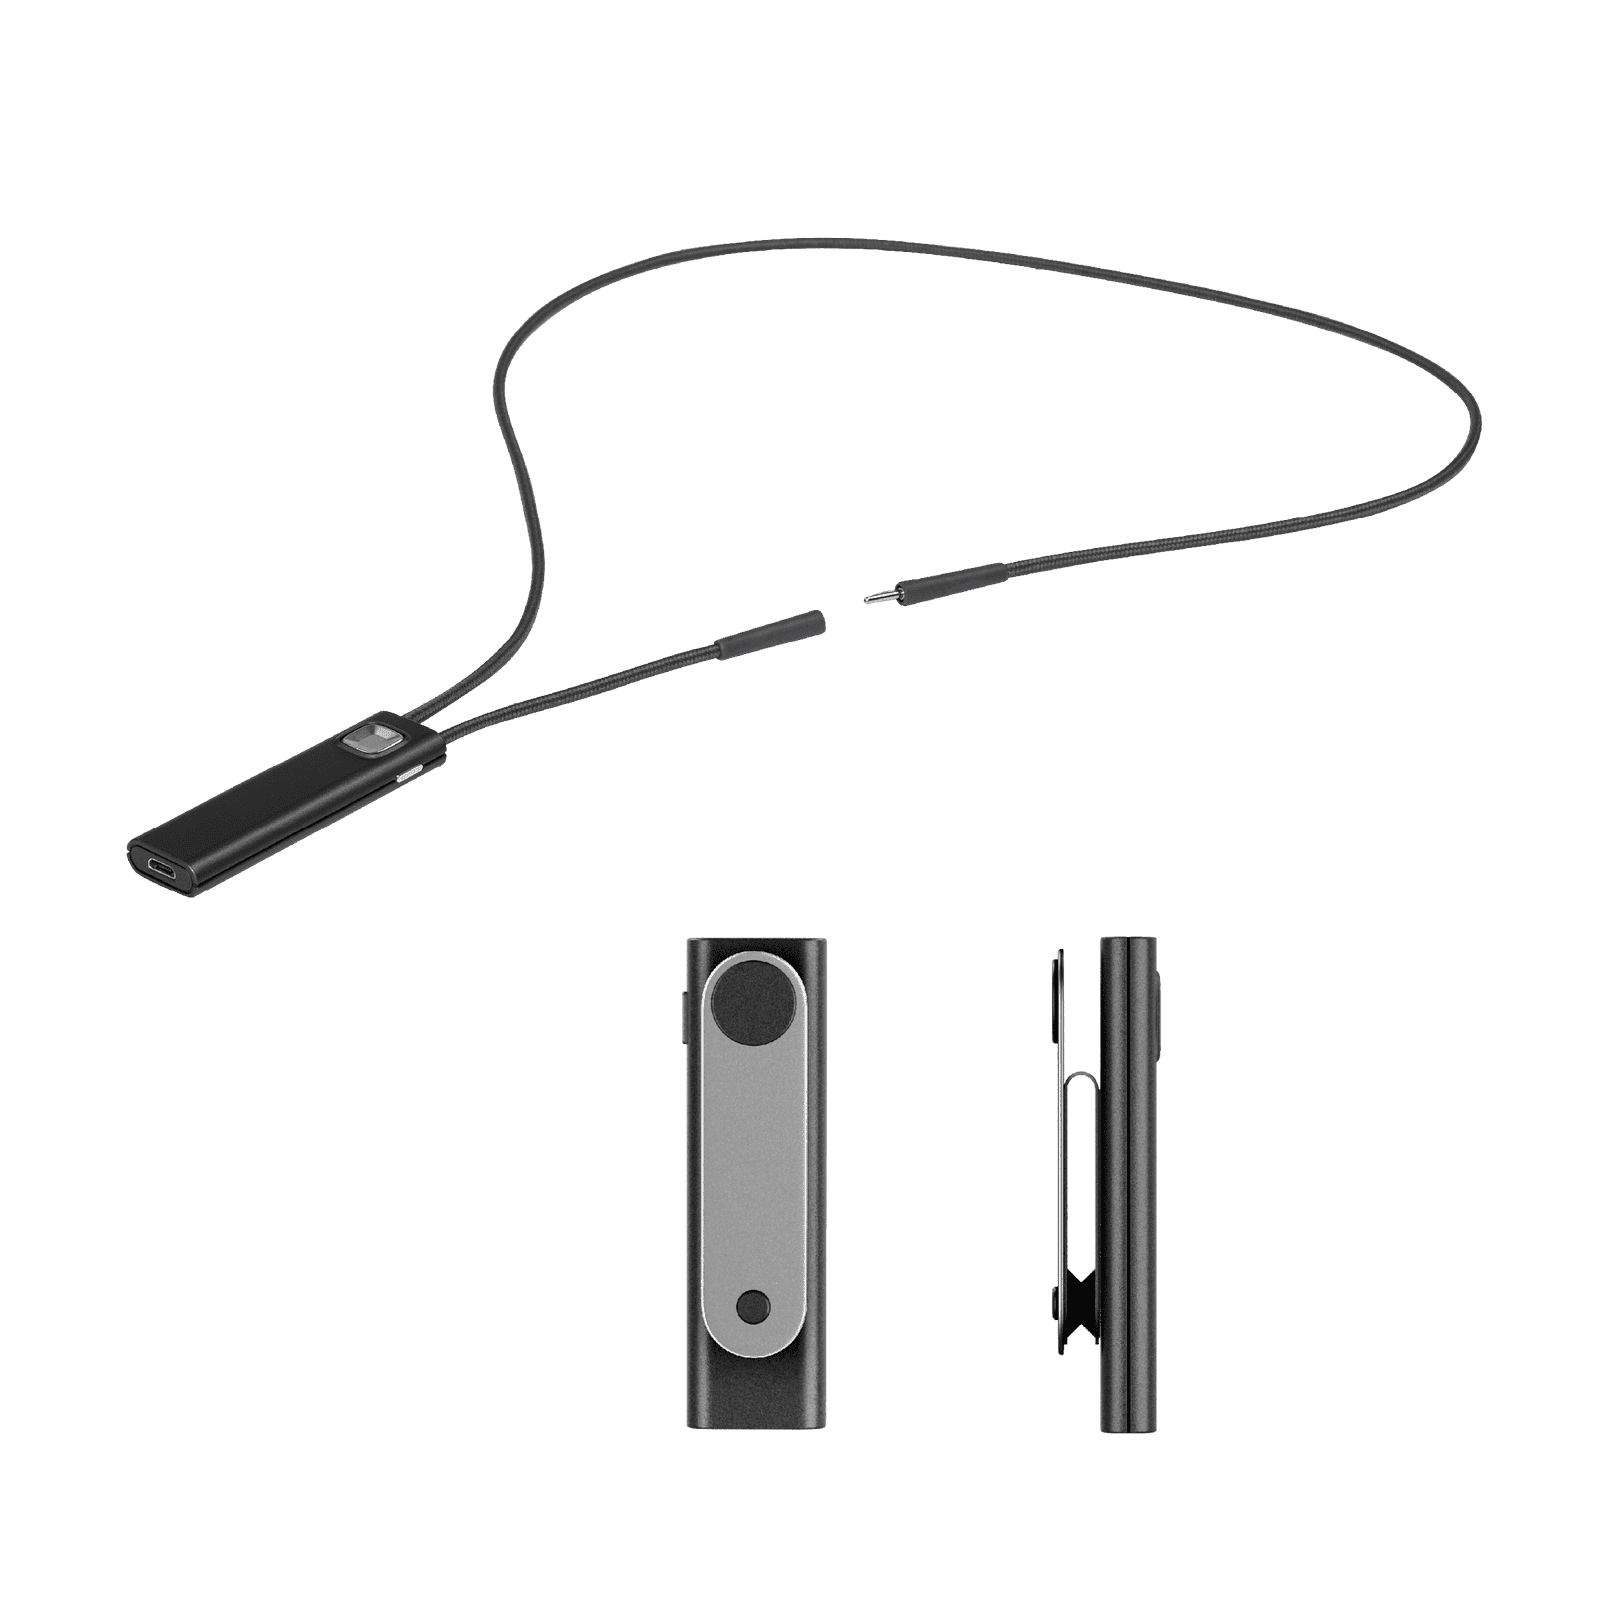 COM-Dex - Hörgerätsteuerung & Verbindungstool